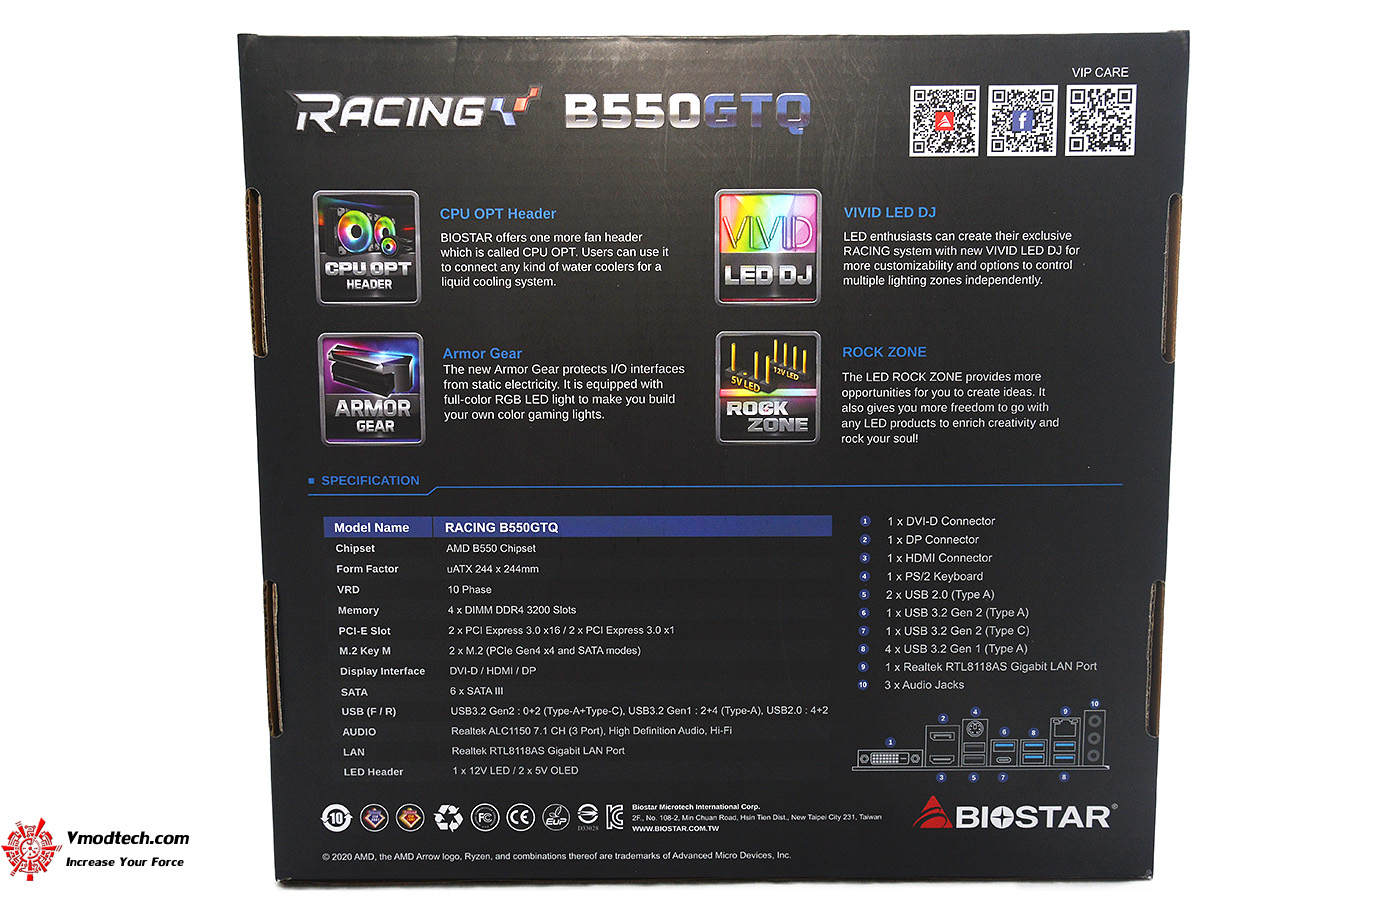 dsc 3748 BIOSTAR Racing B550GTQ REVIEW